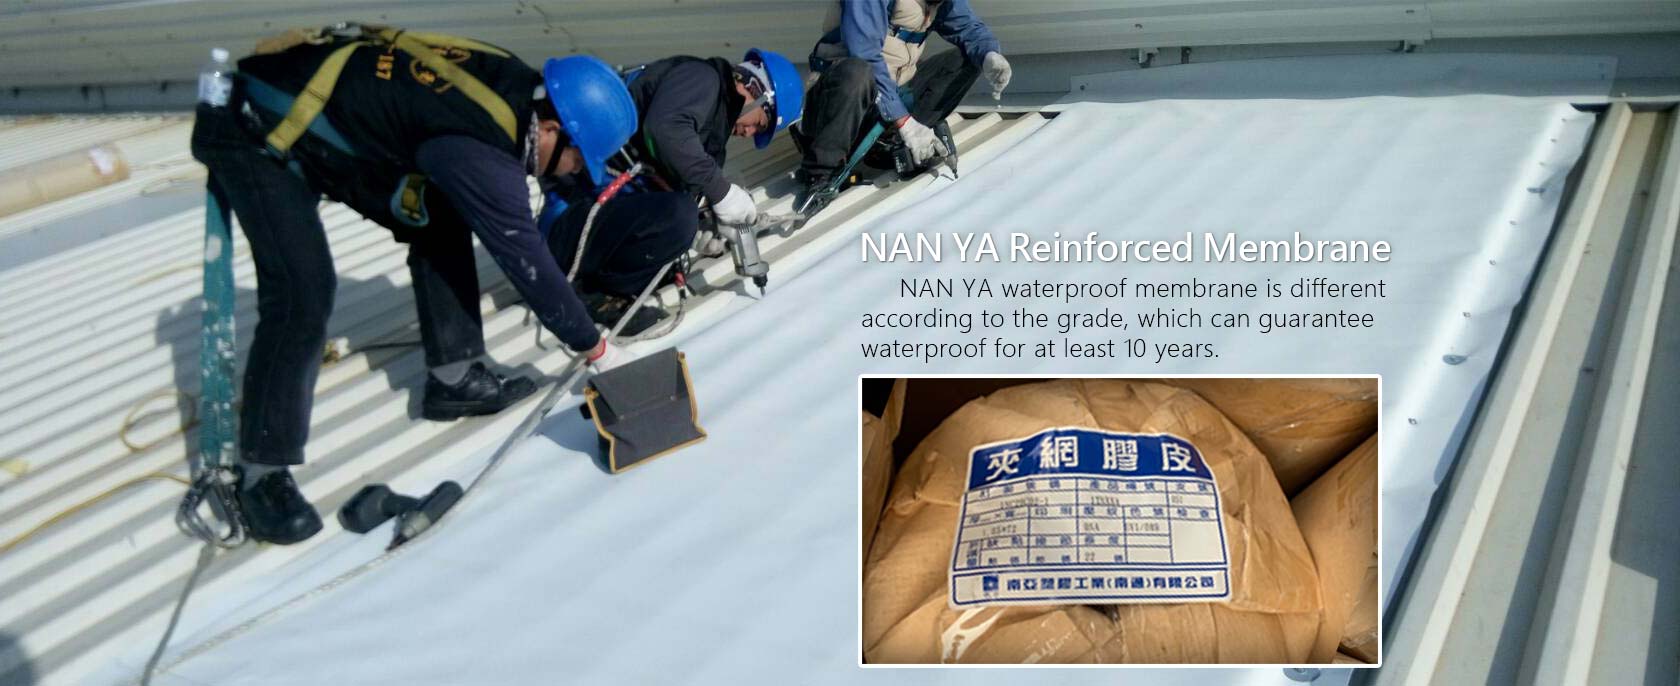 Nan Ya waterproof membrane has quality assurance